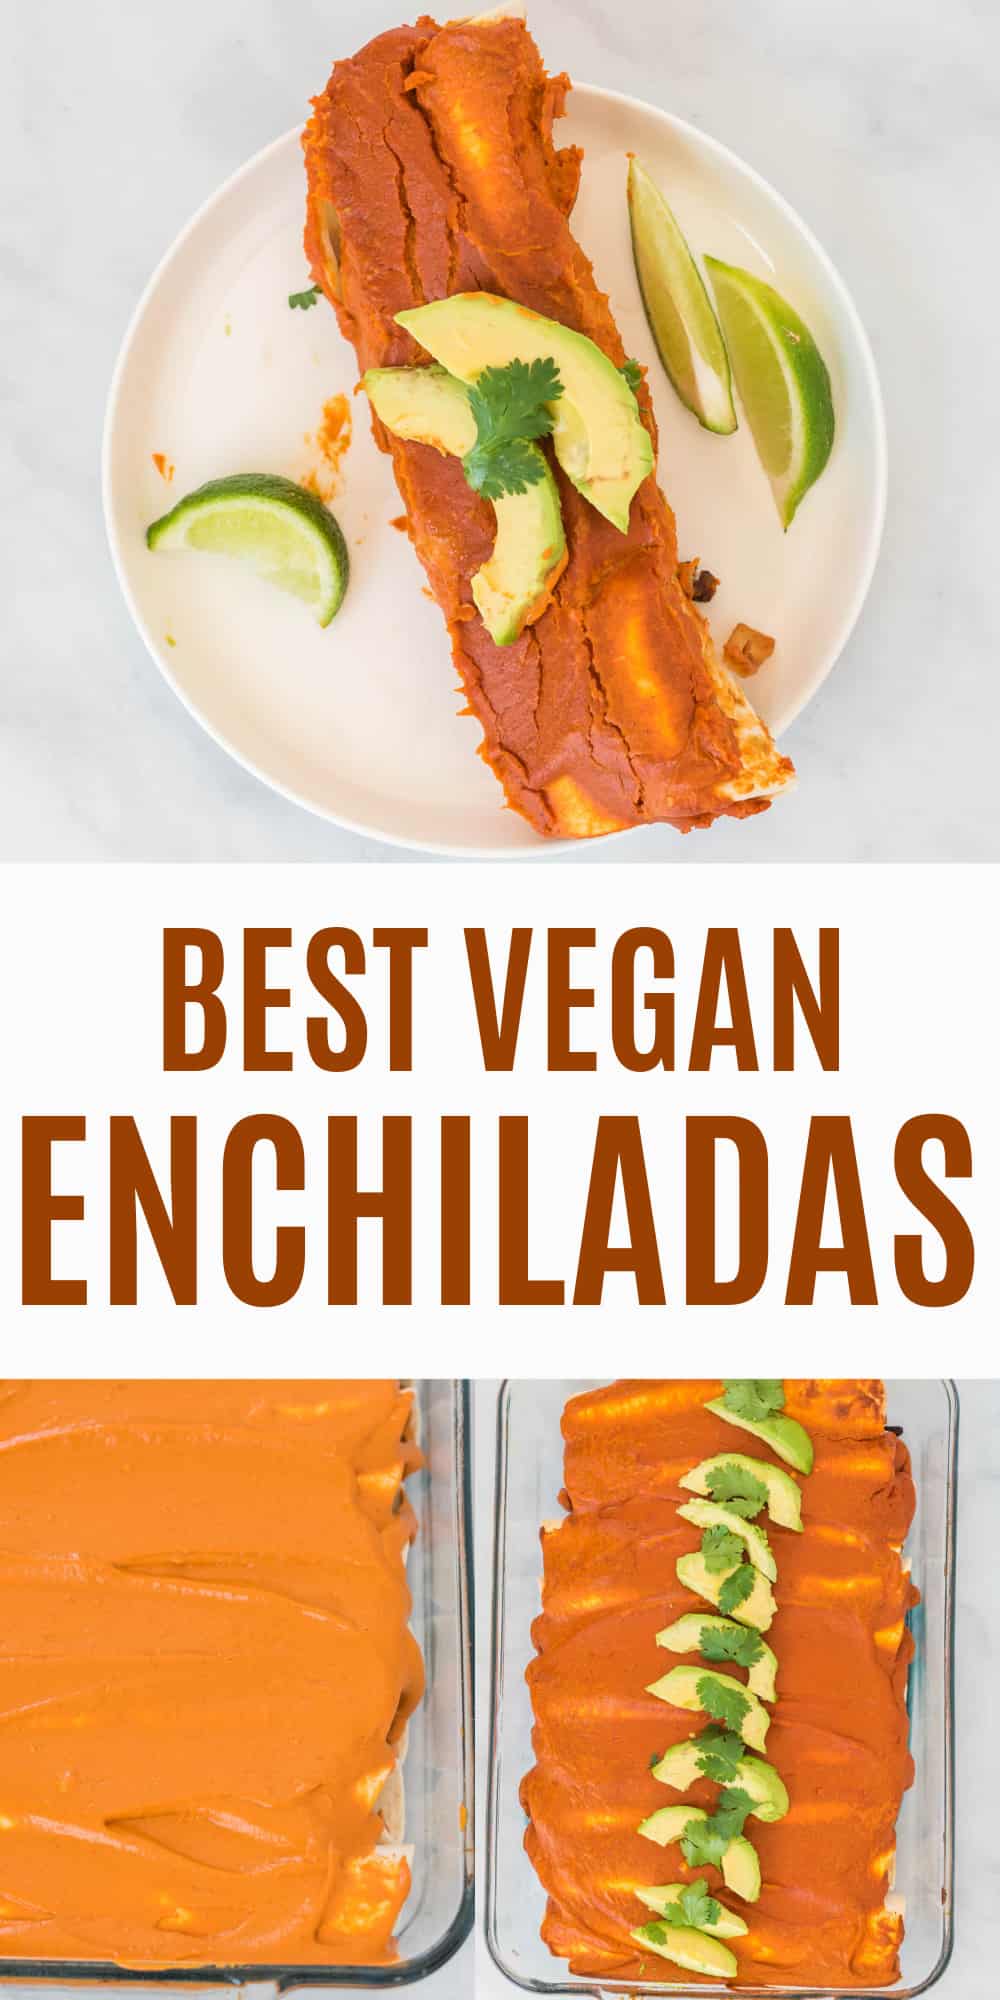 image with text "best vegan enchiladas"